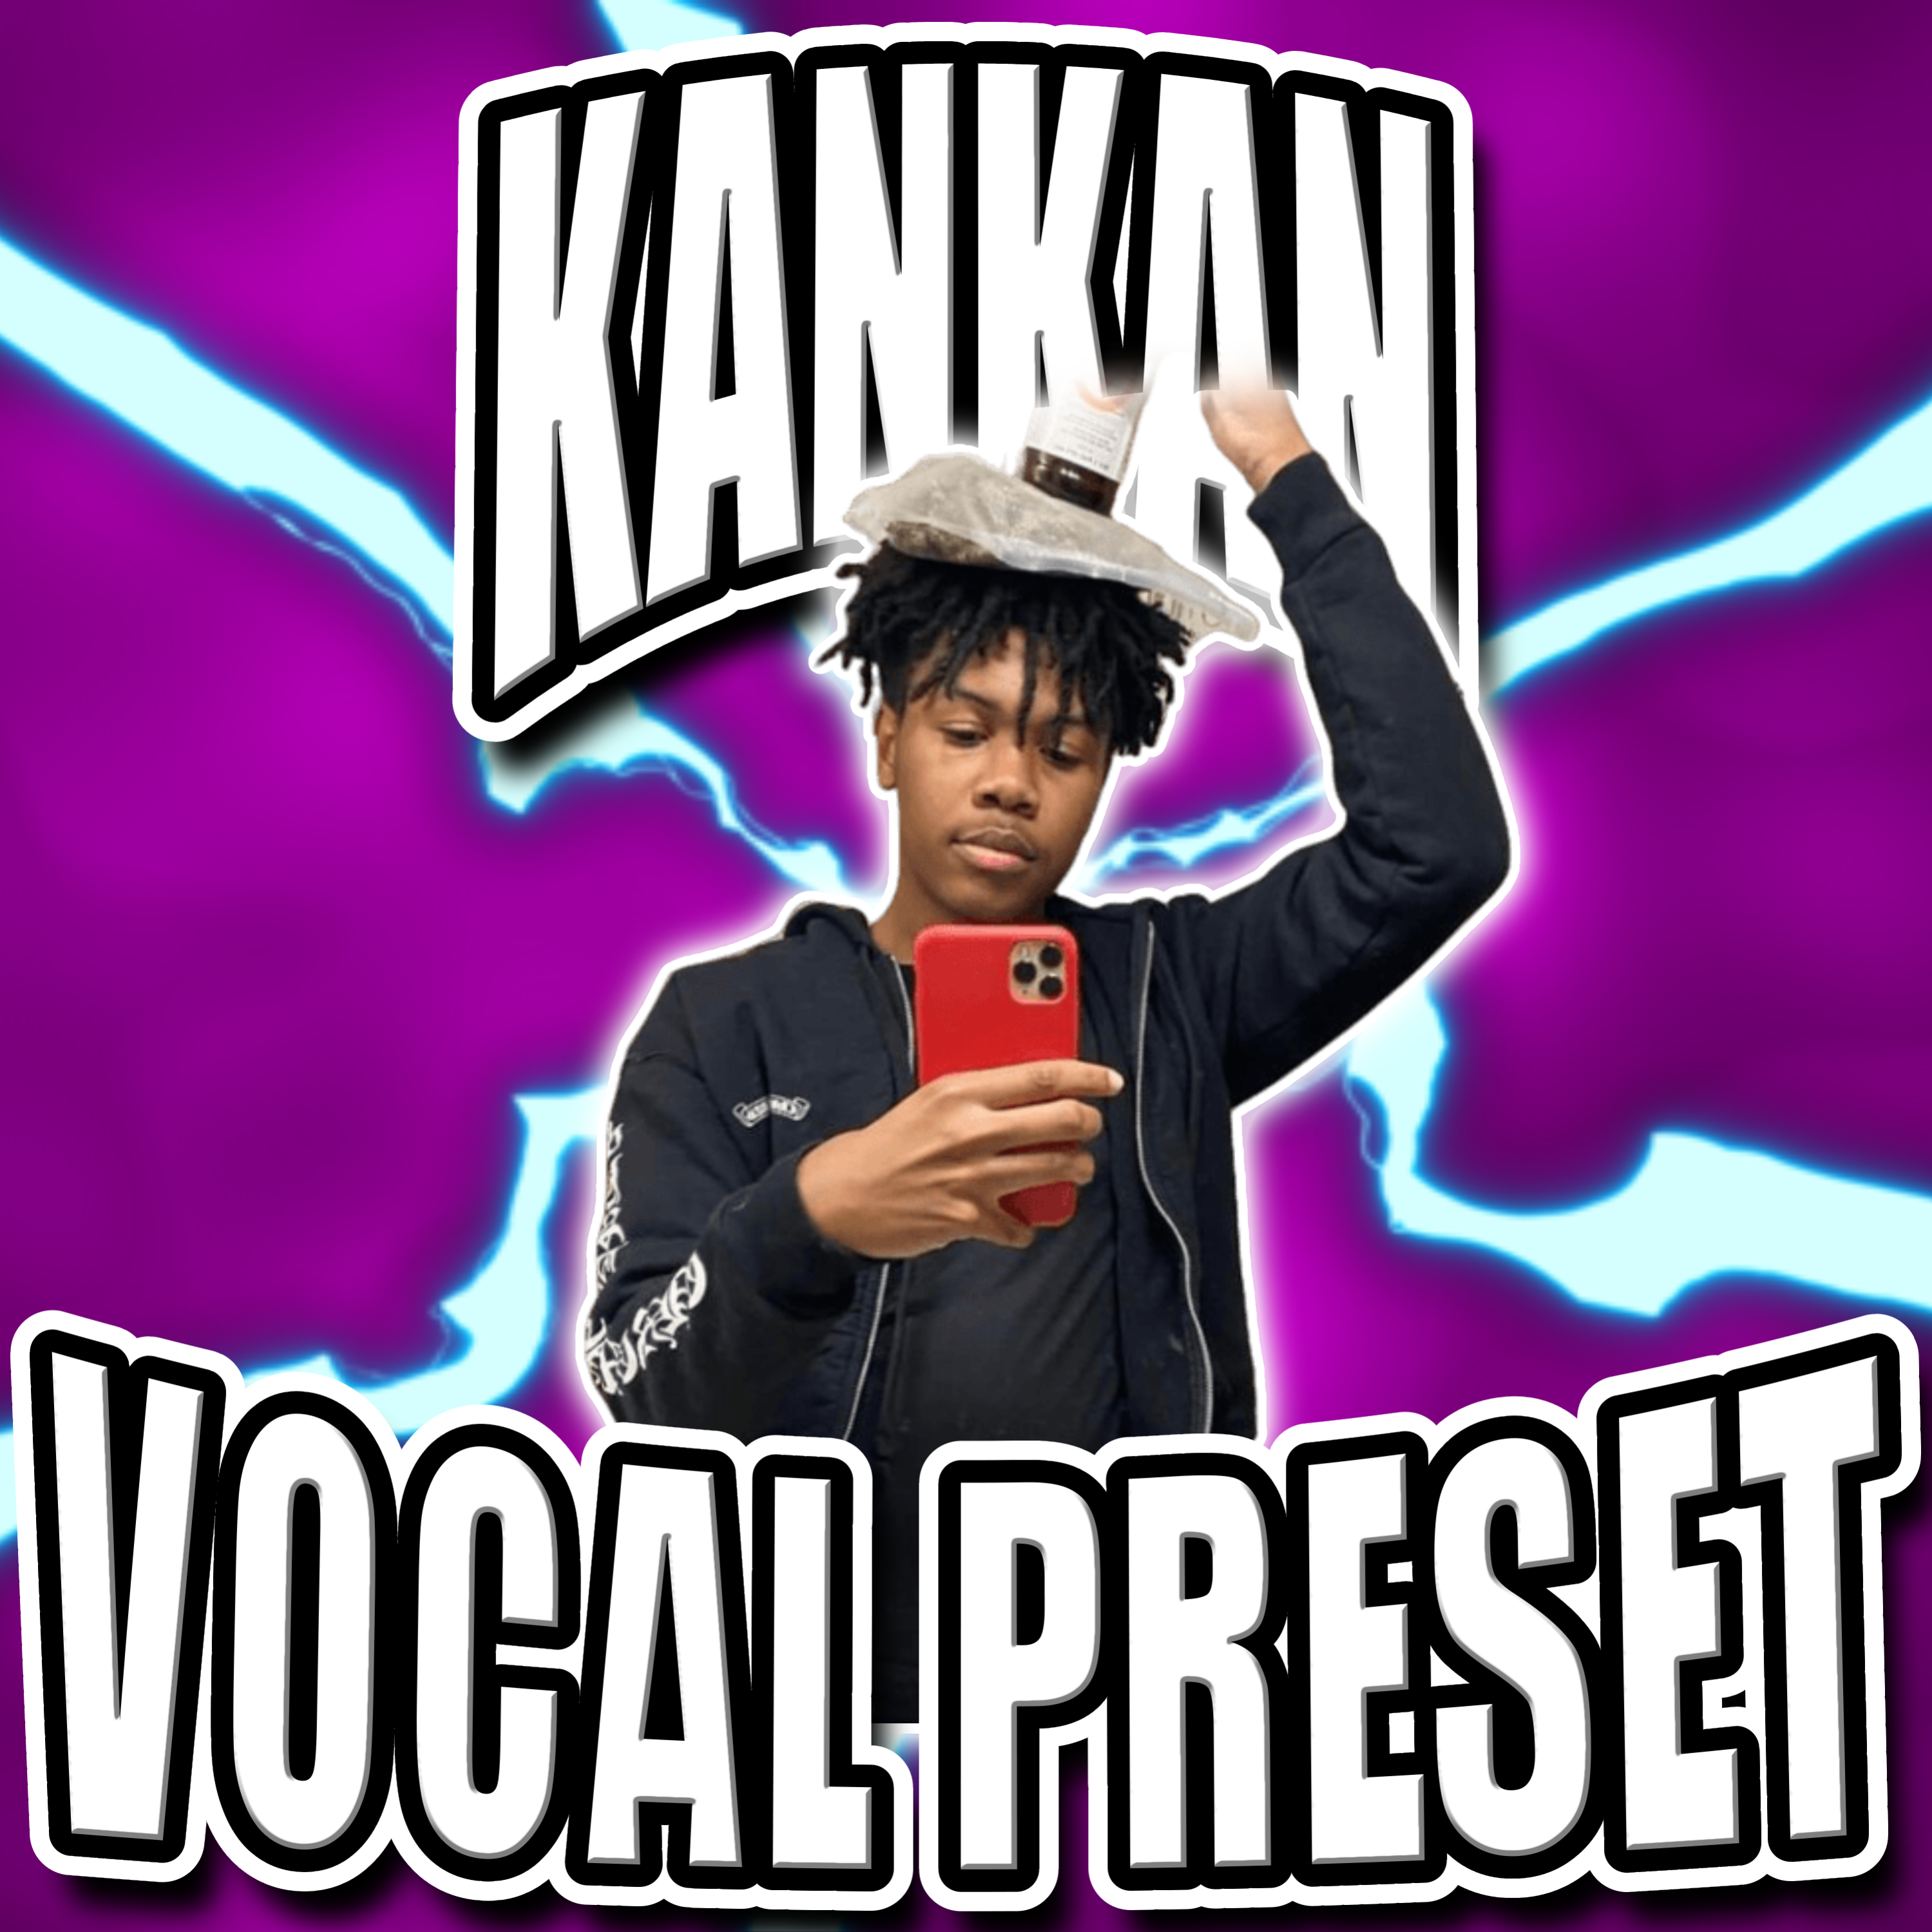 KanKan Vocal Preset